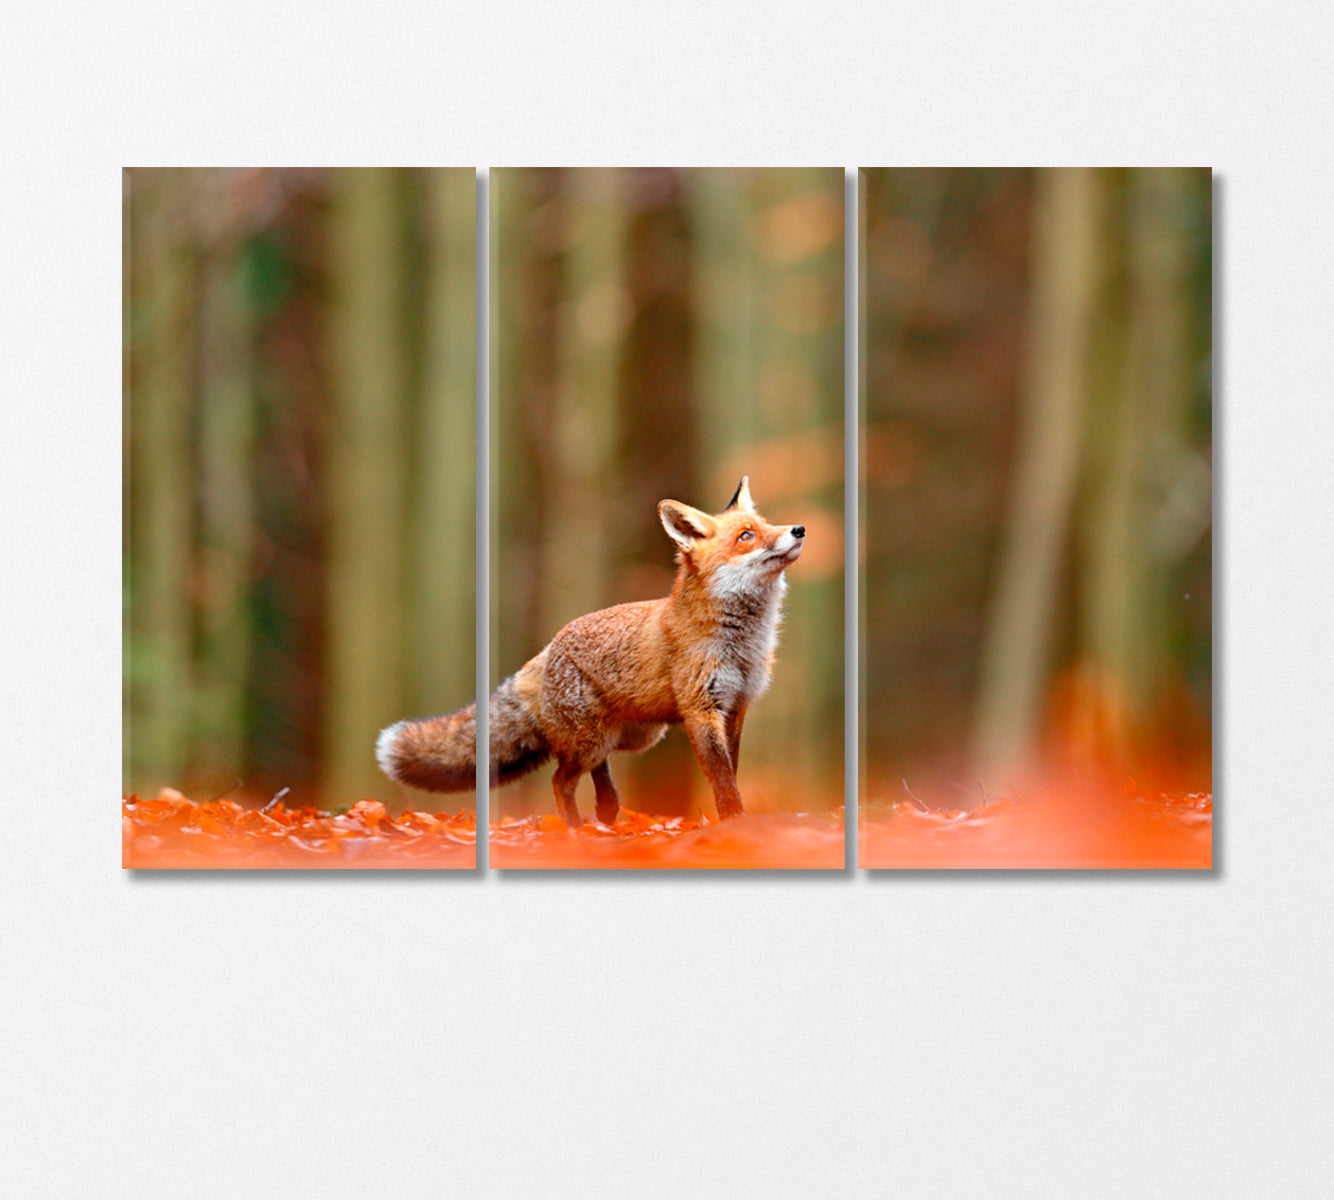 Red Fox Running in Orange Autumn Leaves Canvas Print-Canvas Print-CetArt-3 Panels-36x24 inches-CetArt